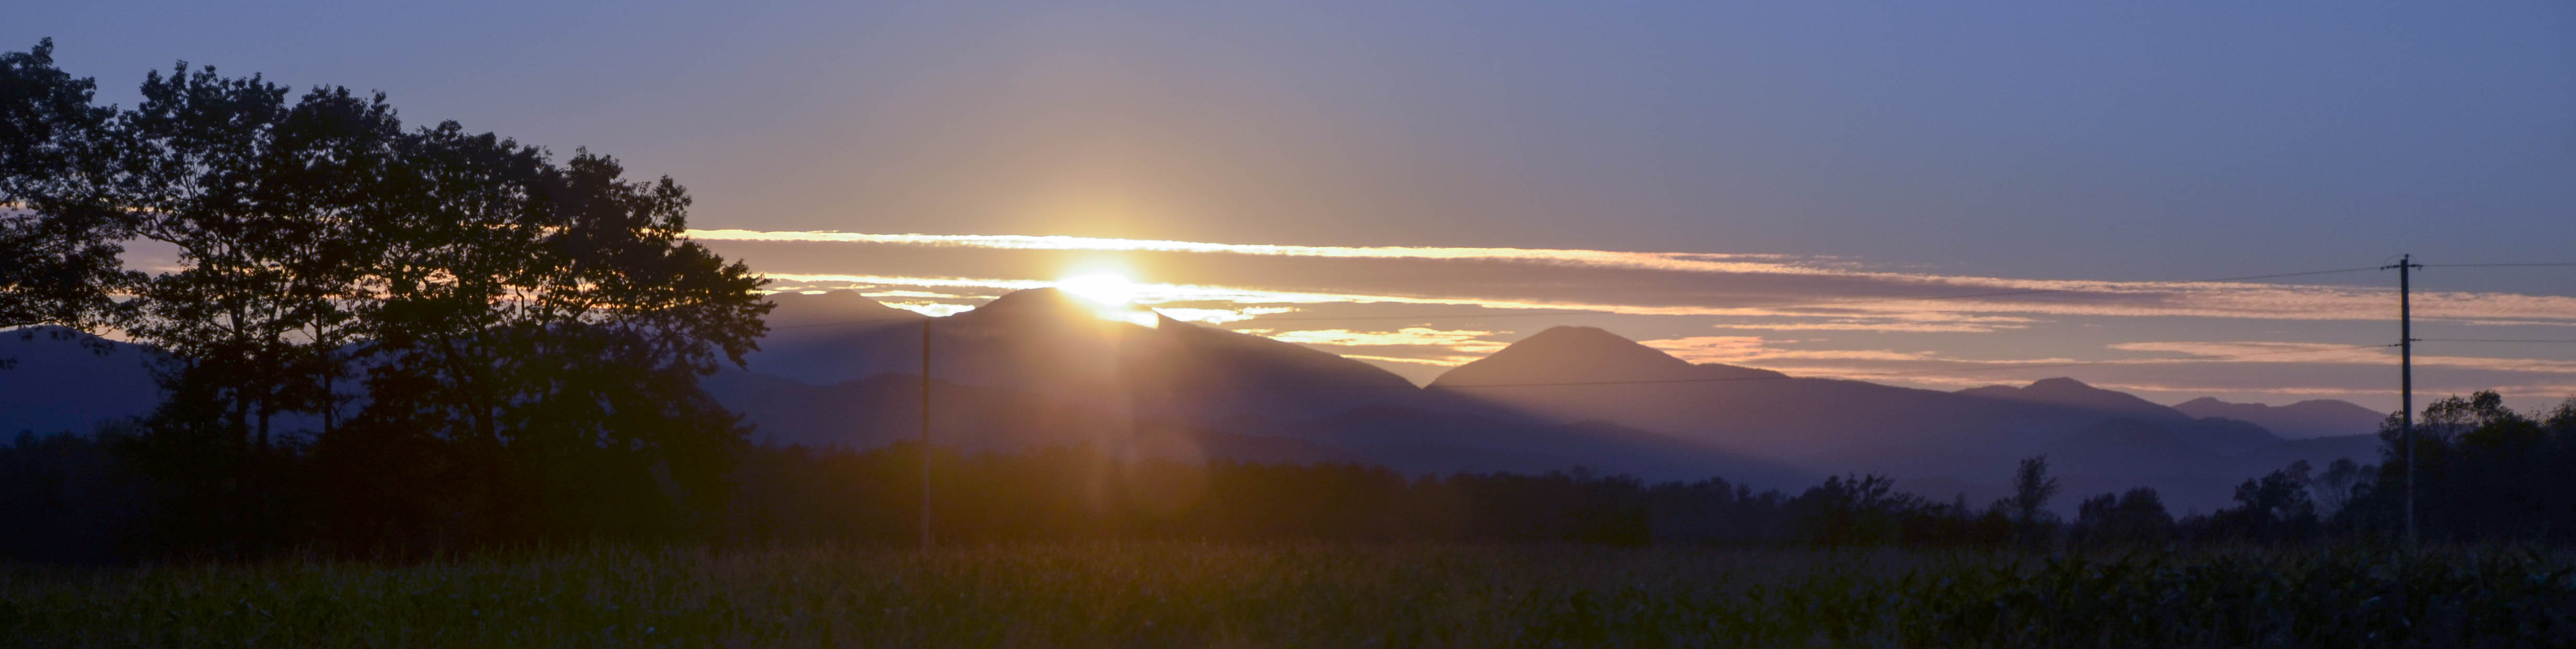 The sun sets into the Adirondack mountains.